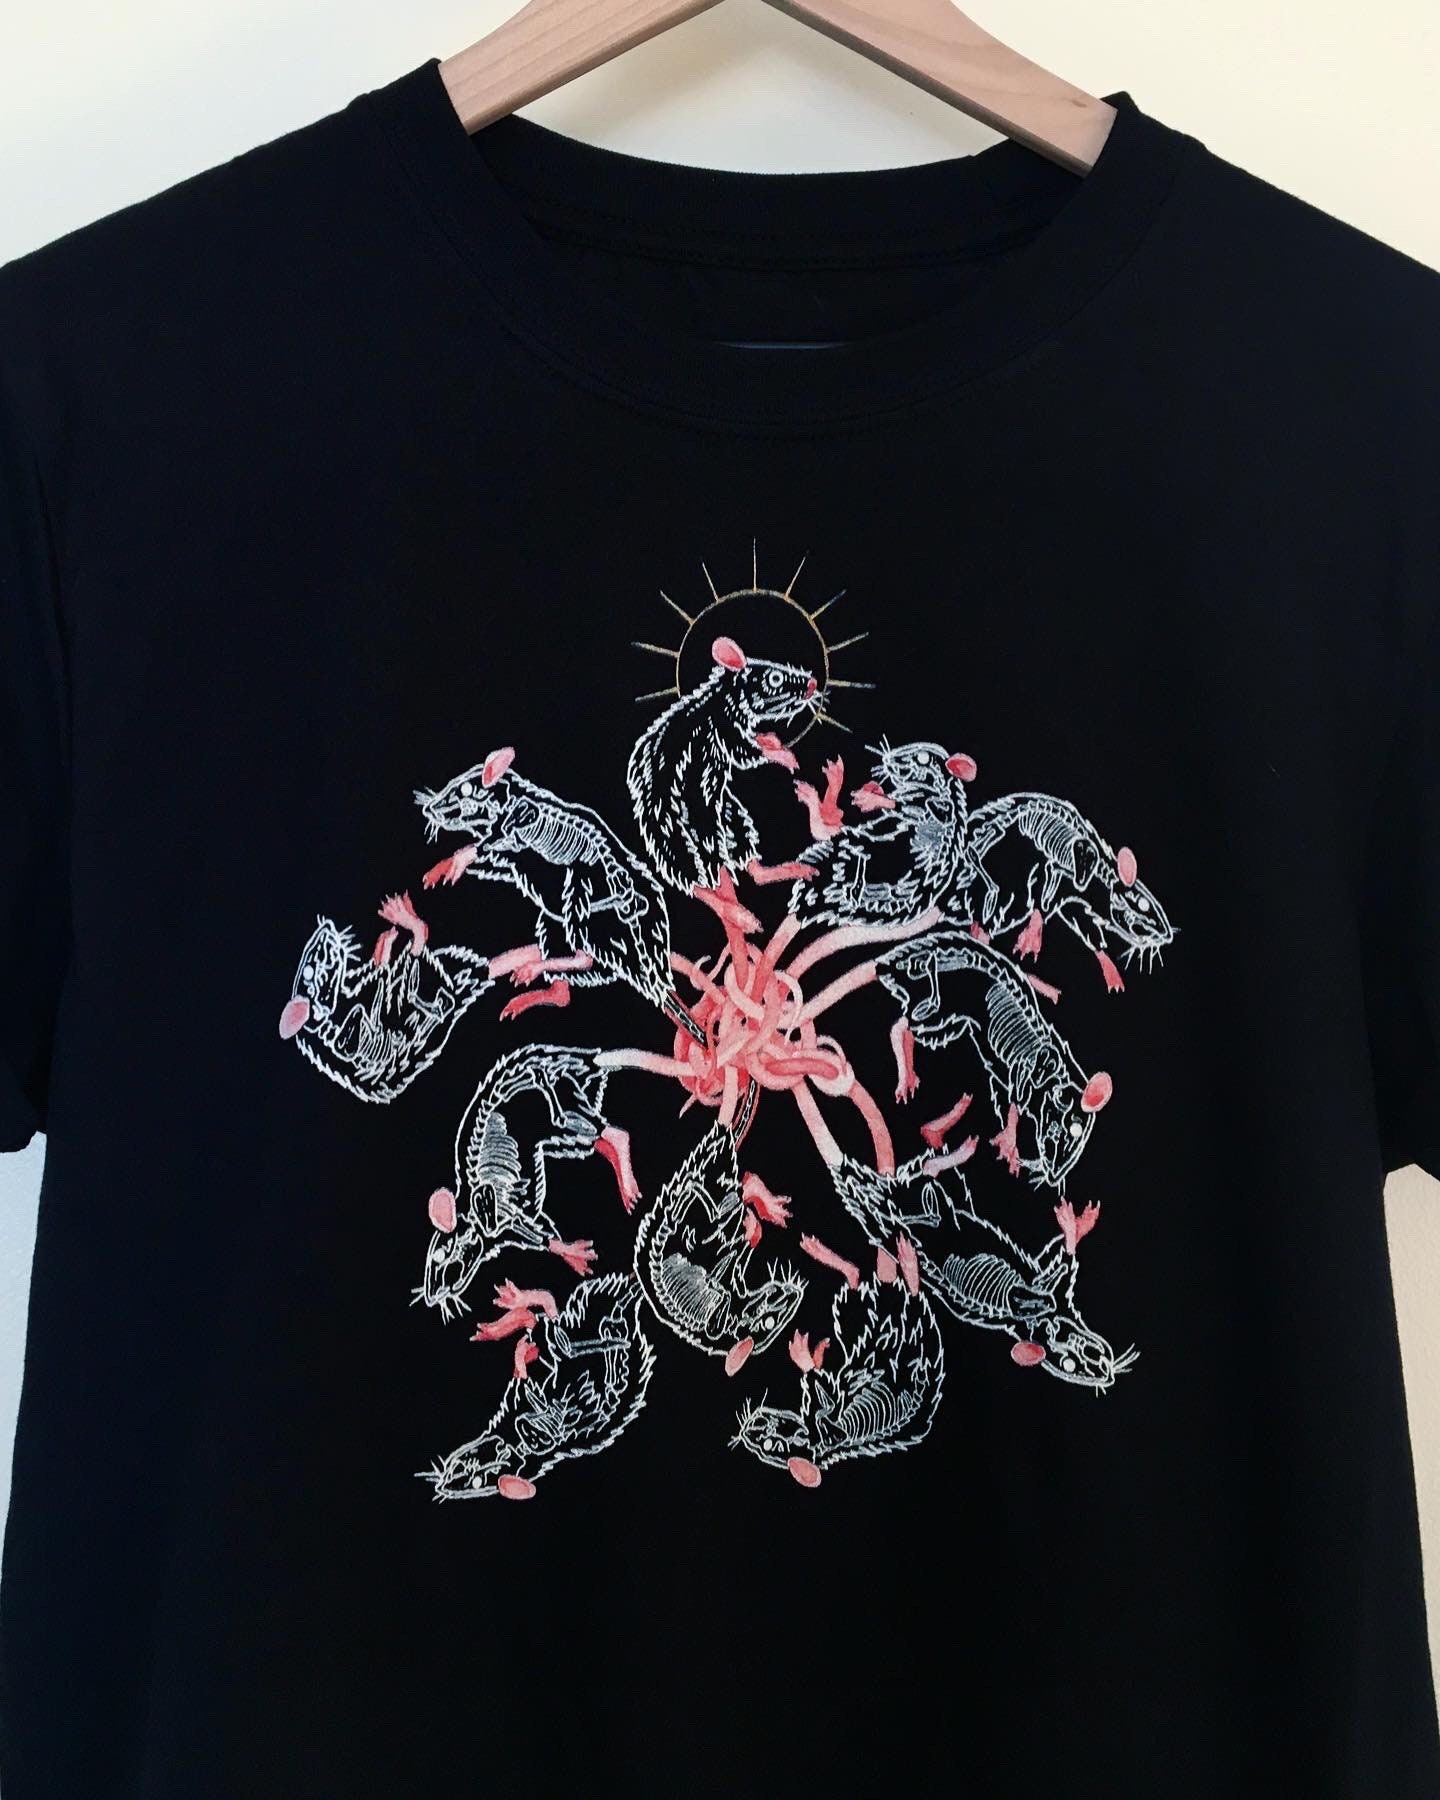 RAT KING COVENANT - Dark Souls - T-Shirt